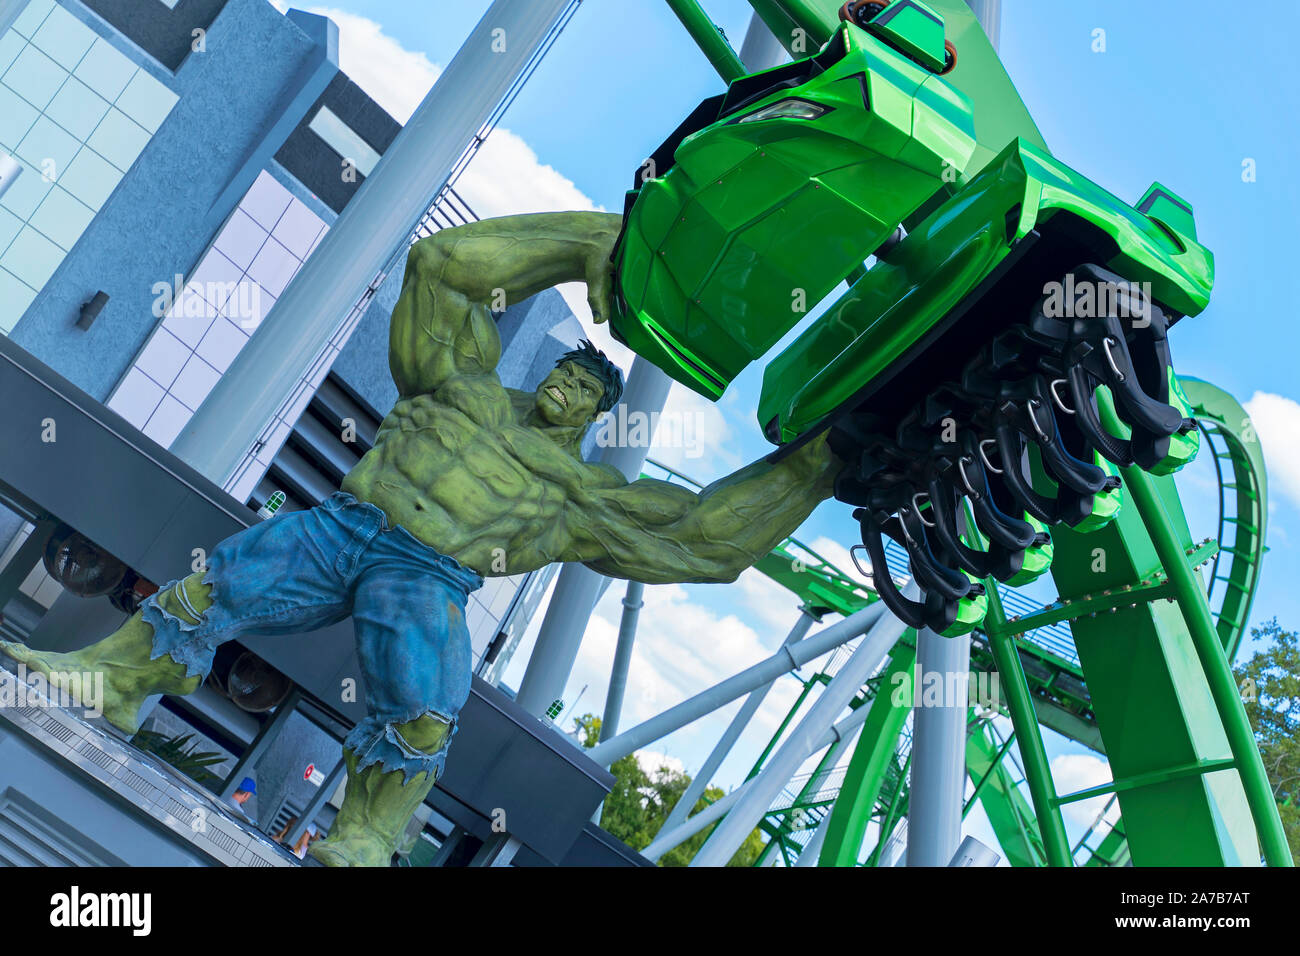 Incredible Hulk roller coaster ride, Isole di avventura, Universal Studios Orlando, Florida, Stati Uniti d'America Foto Stock